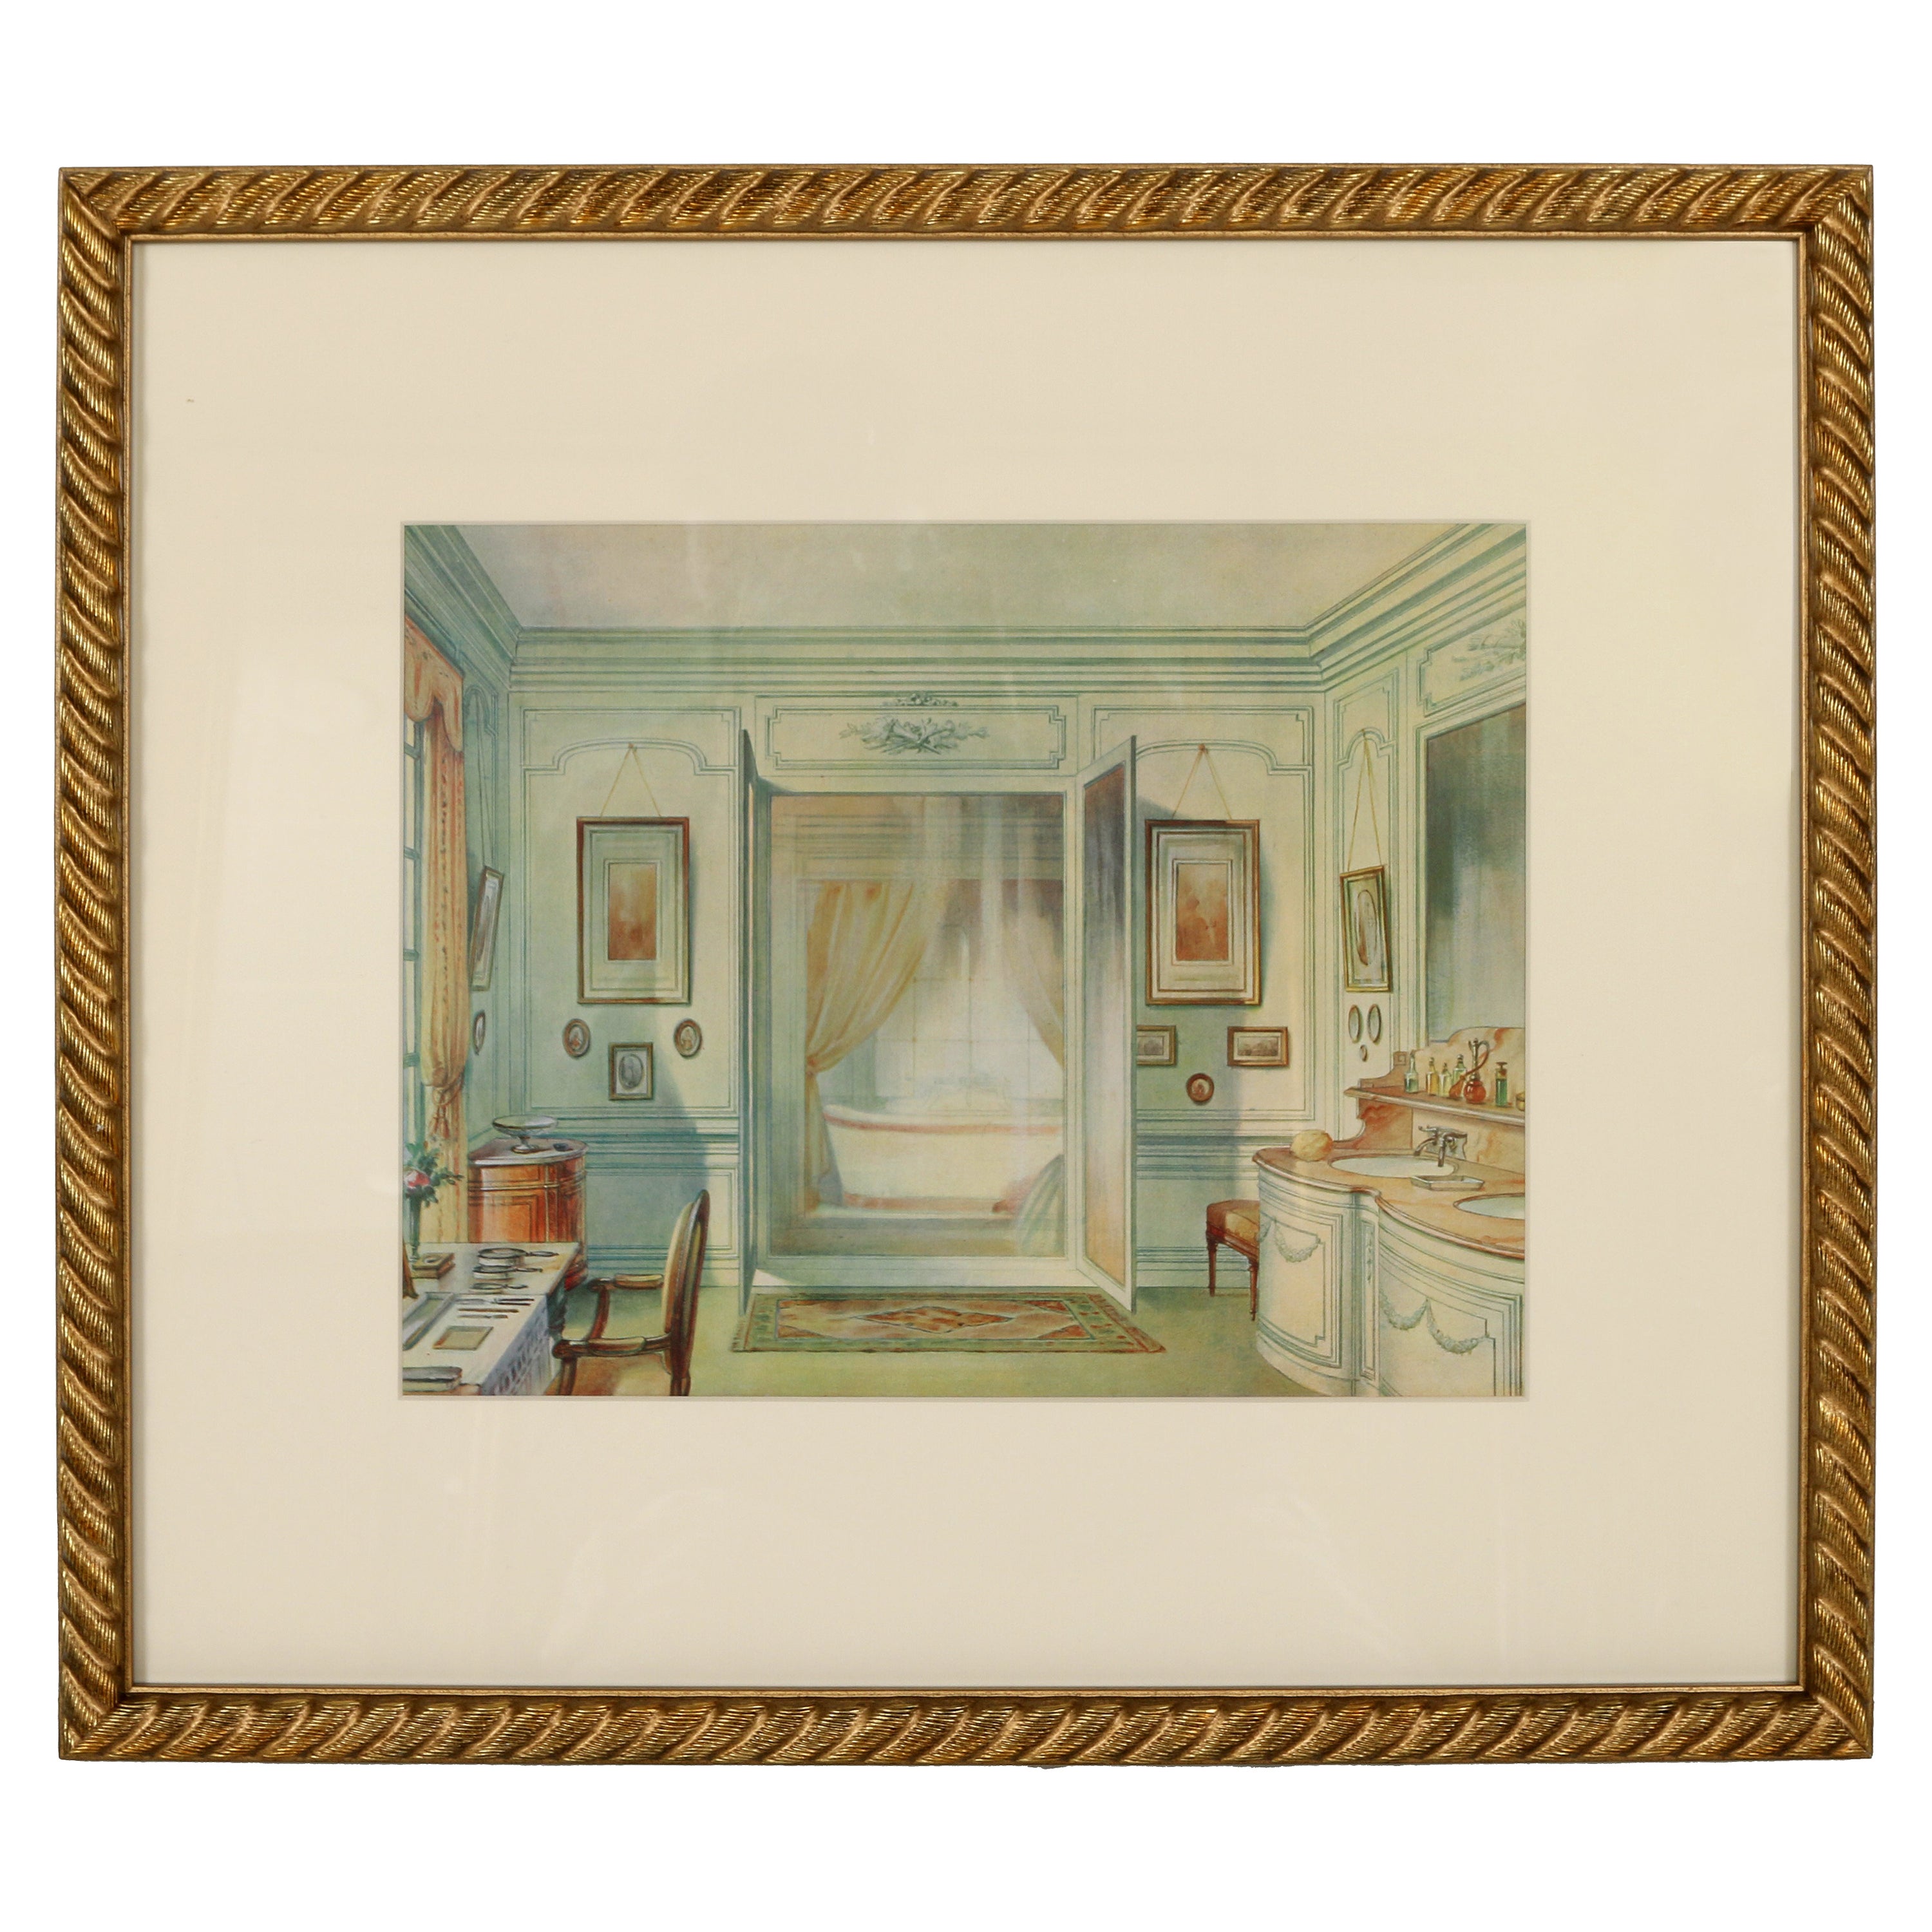 Print of an Interior Bath For Sale